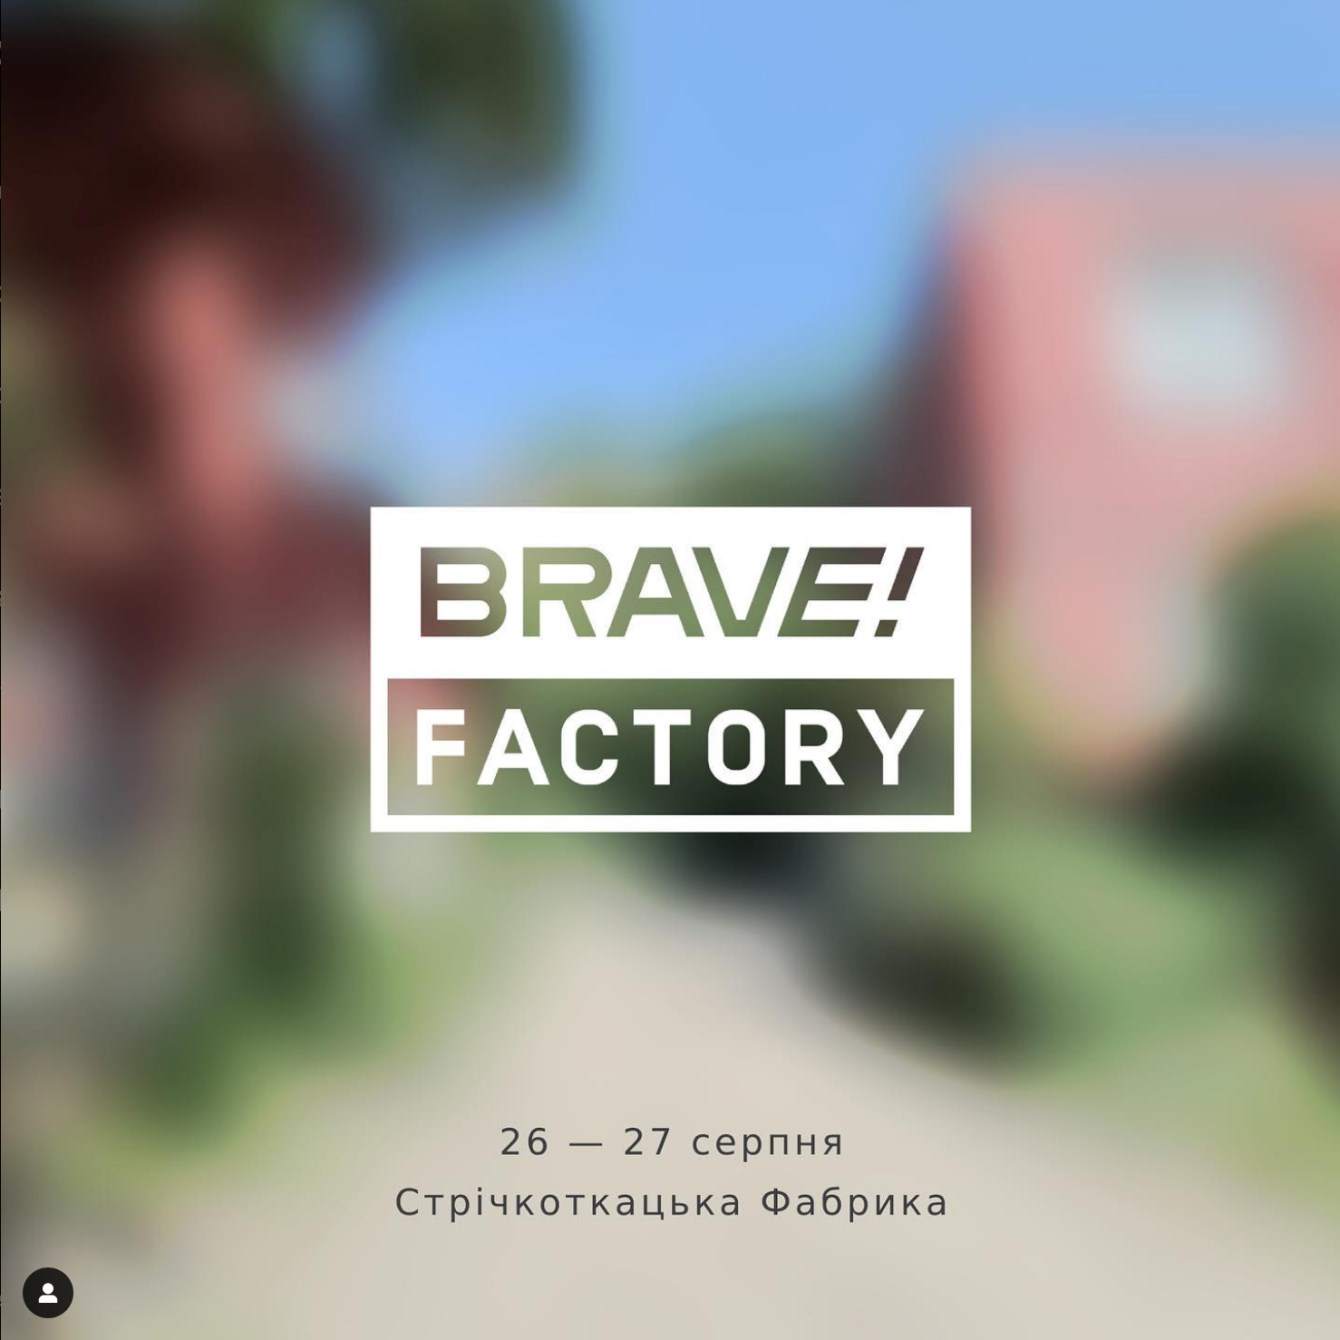 Brave! Factory - Página frontal